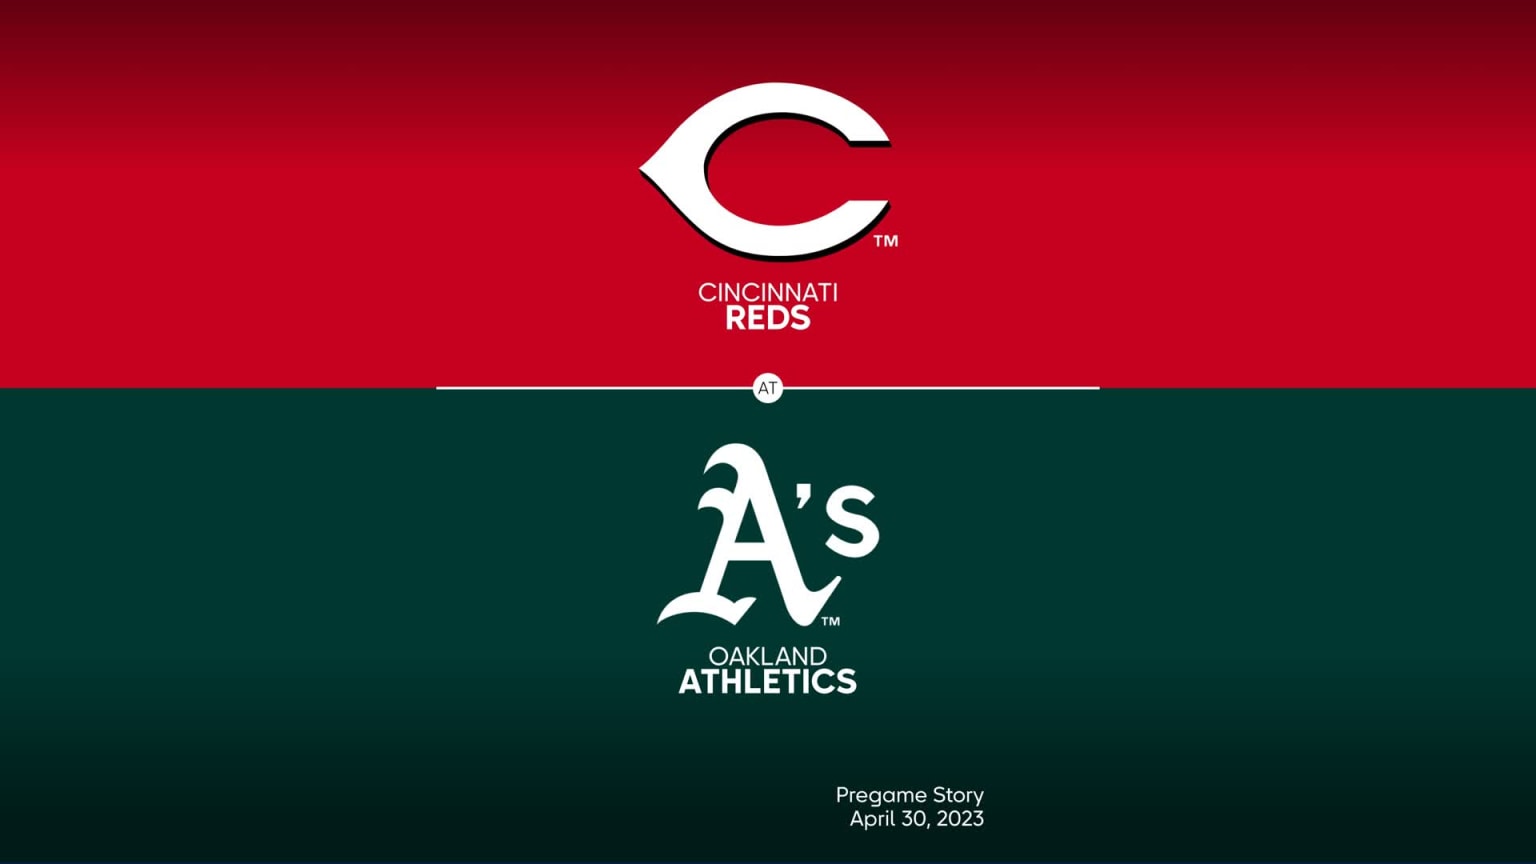 Cincinnati Reds vs. Oakland Athletics, April 30, 2023